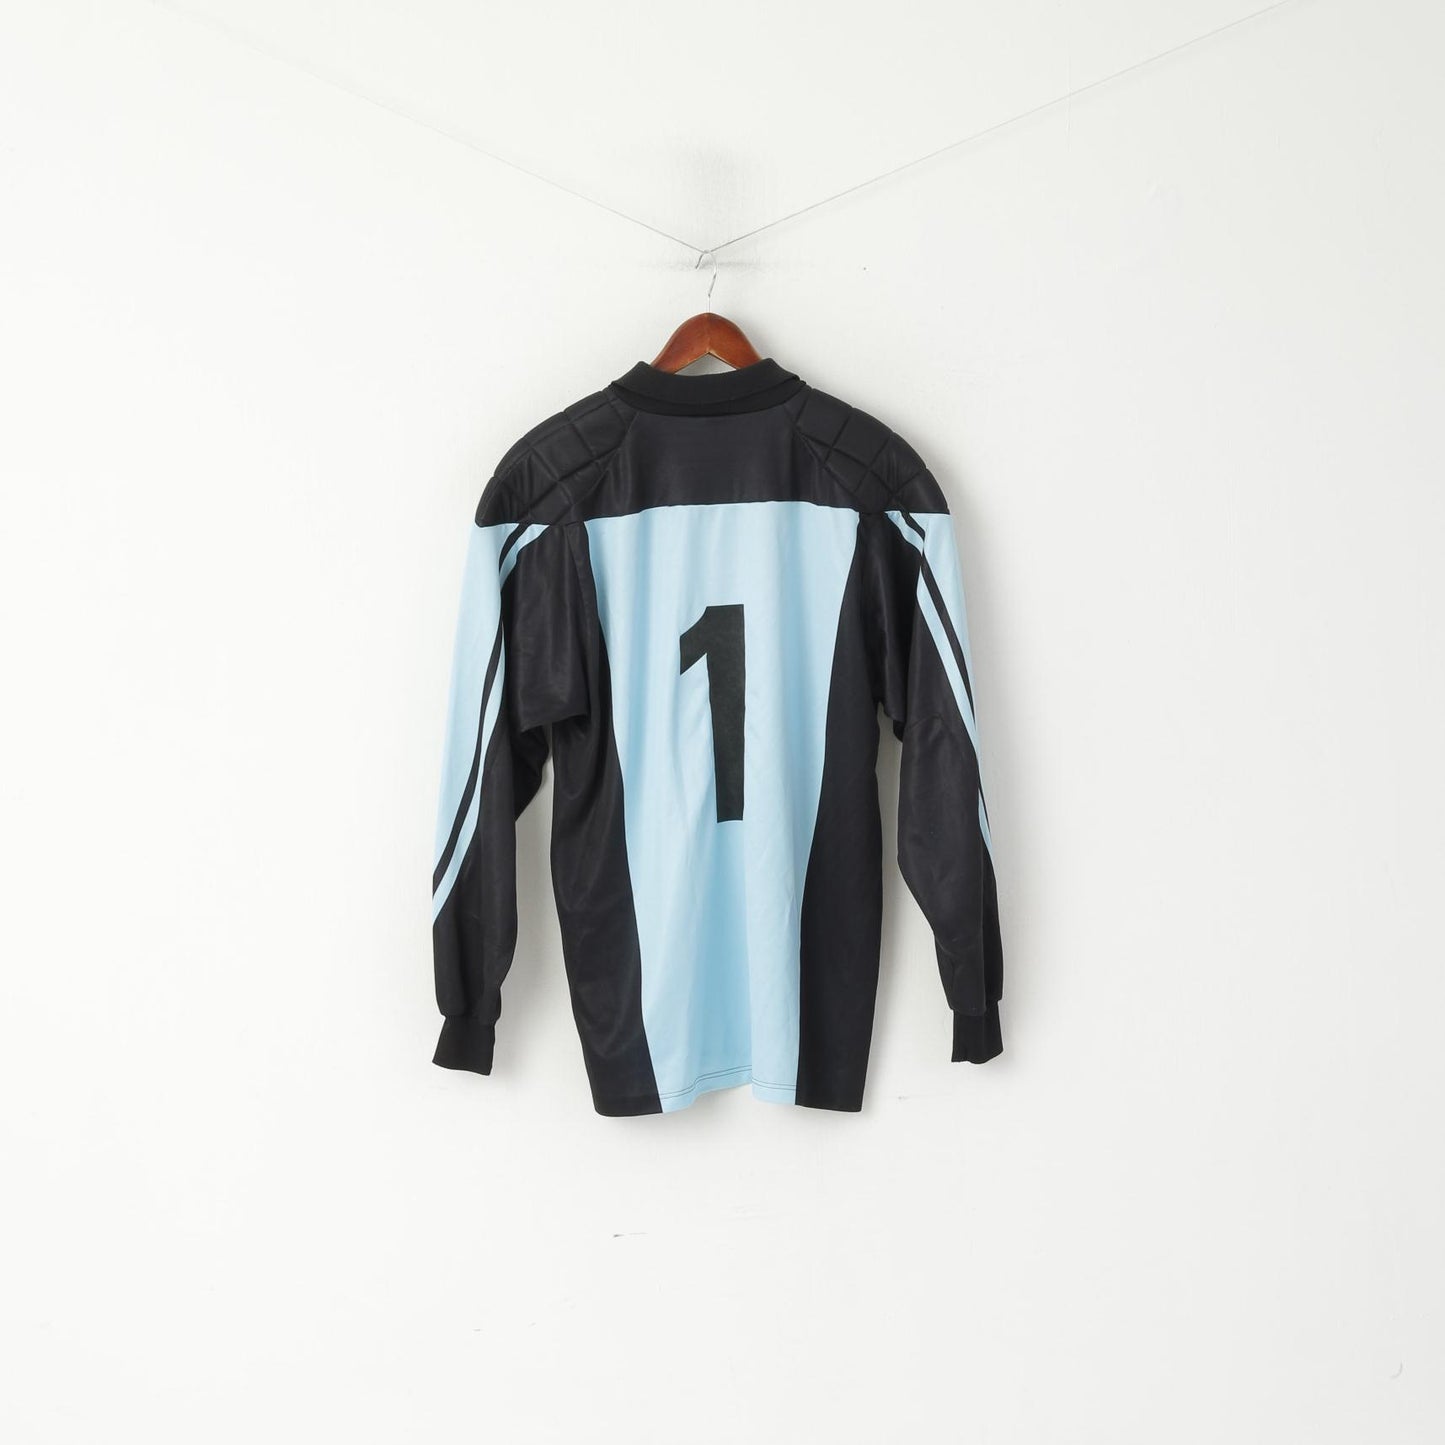 Erima Homme L/XL Polo Bleu Vintage Gardien Football Sport FKP #1 Haut